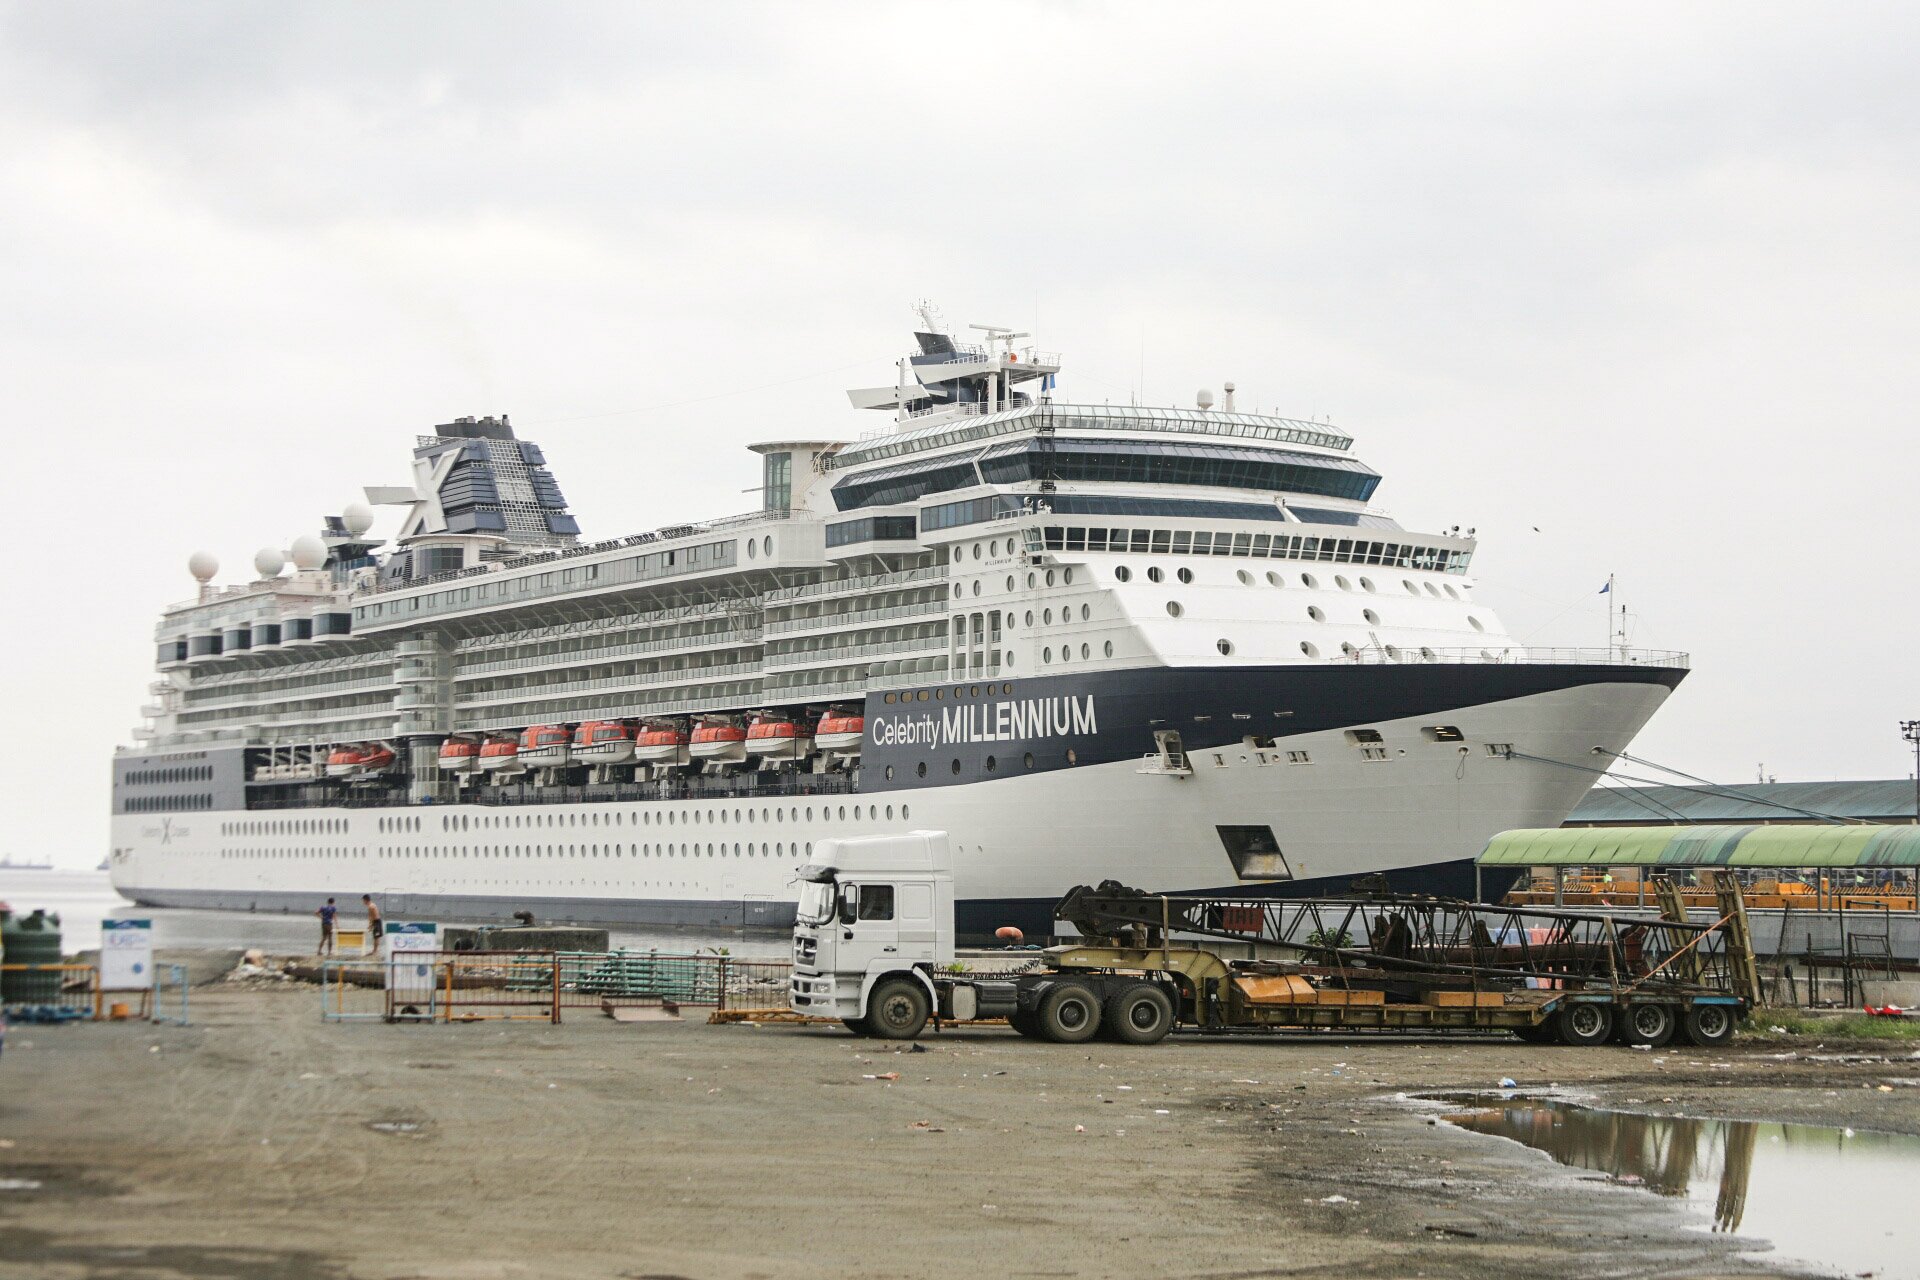 Celebrity Mellennium docked in South Harbor Manila